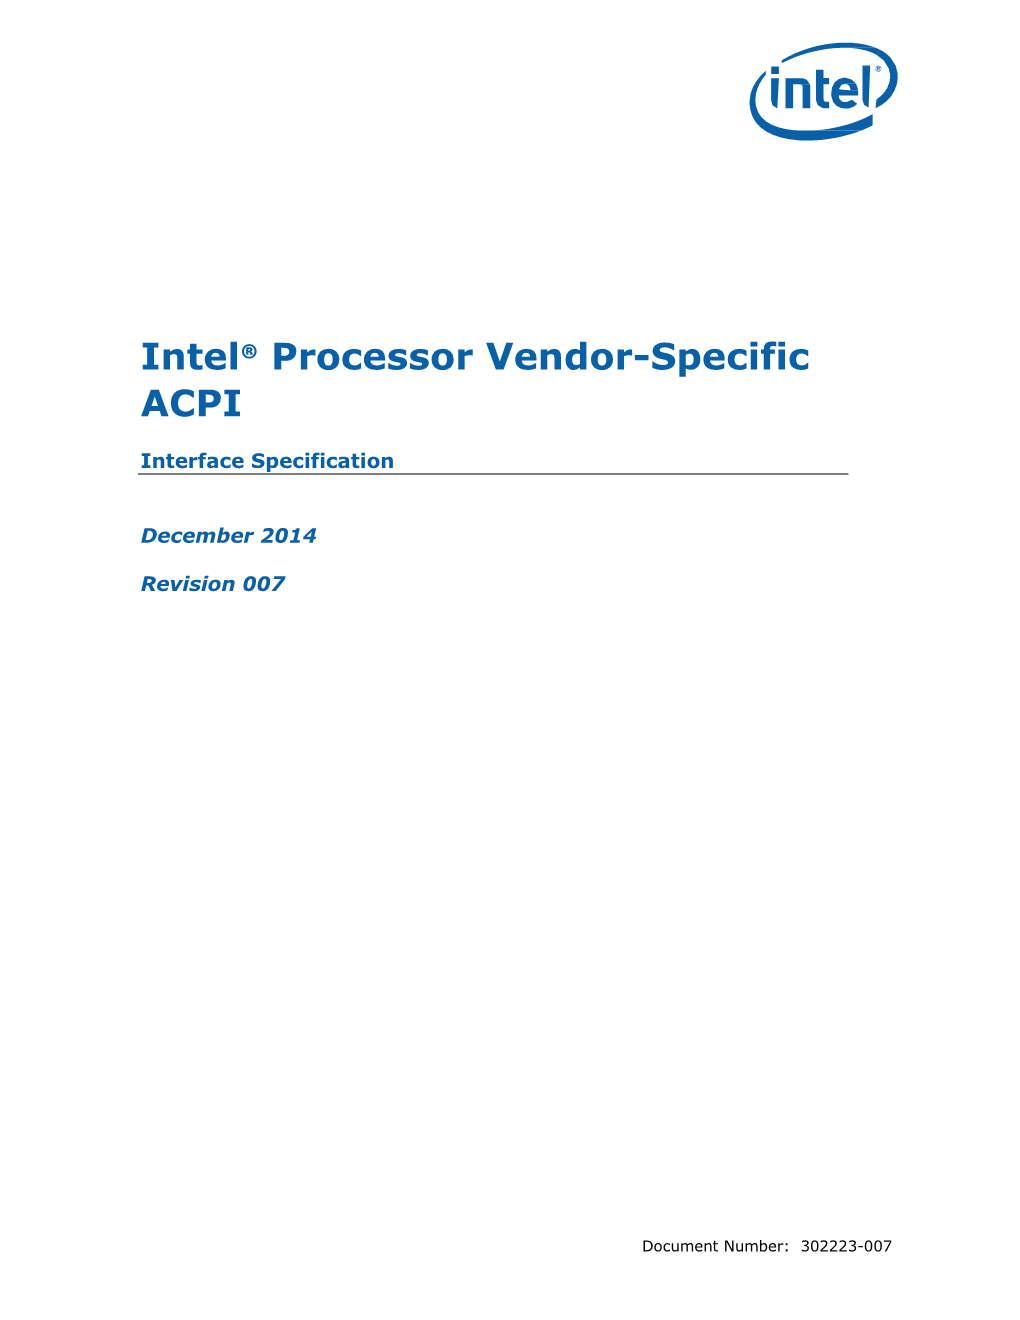 Intel® Processor Vendor-Specific ACPI Interface Specification